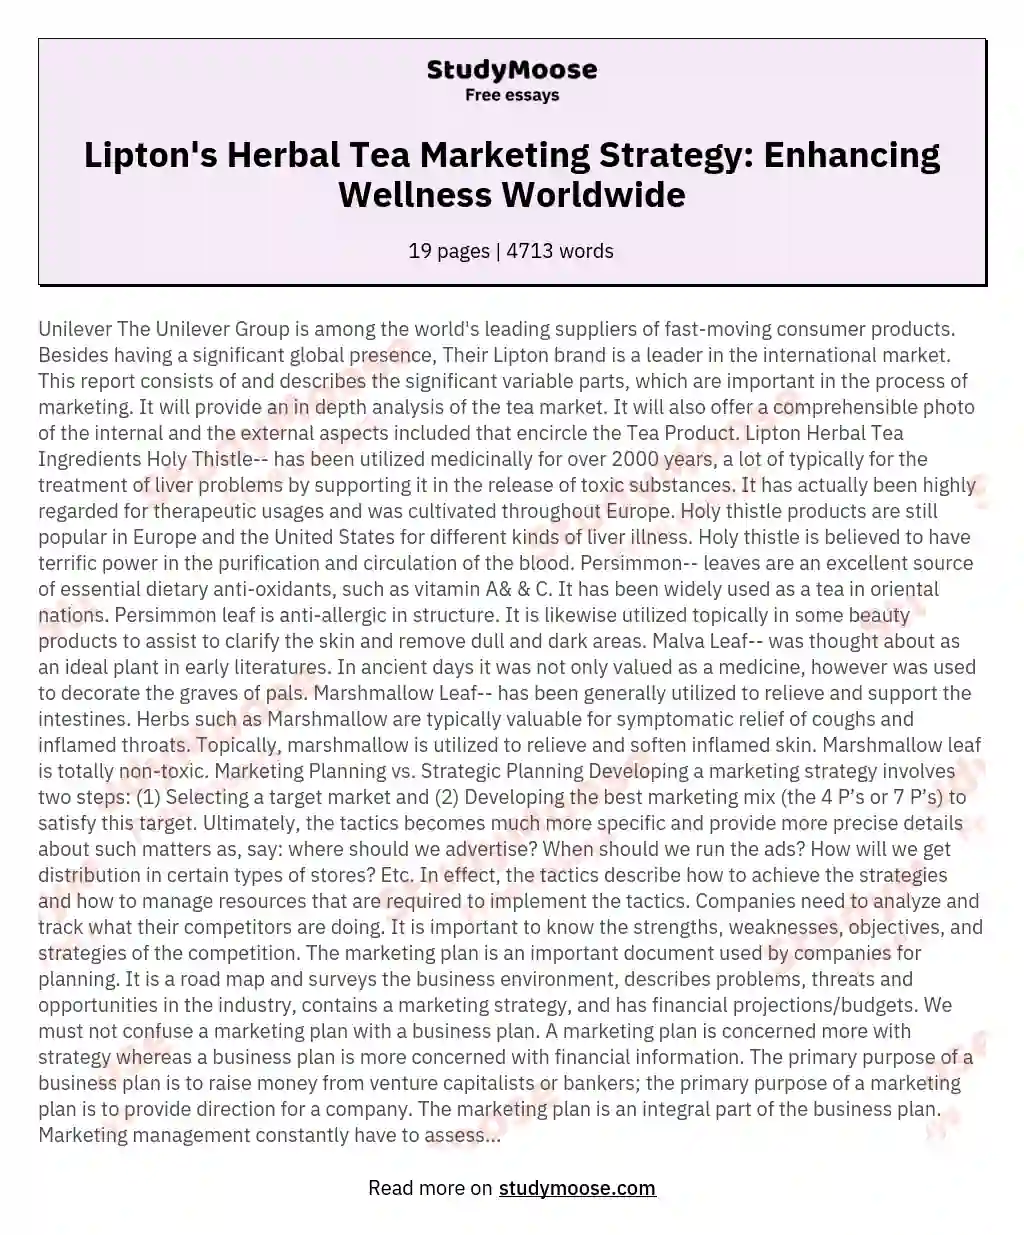 Lipton's Herbal Tea Marketing Strategy: Enhancing Wellness Worldwide essay